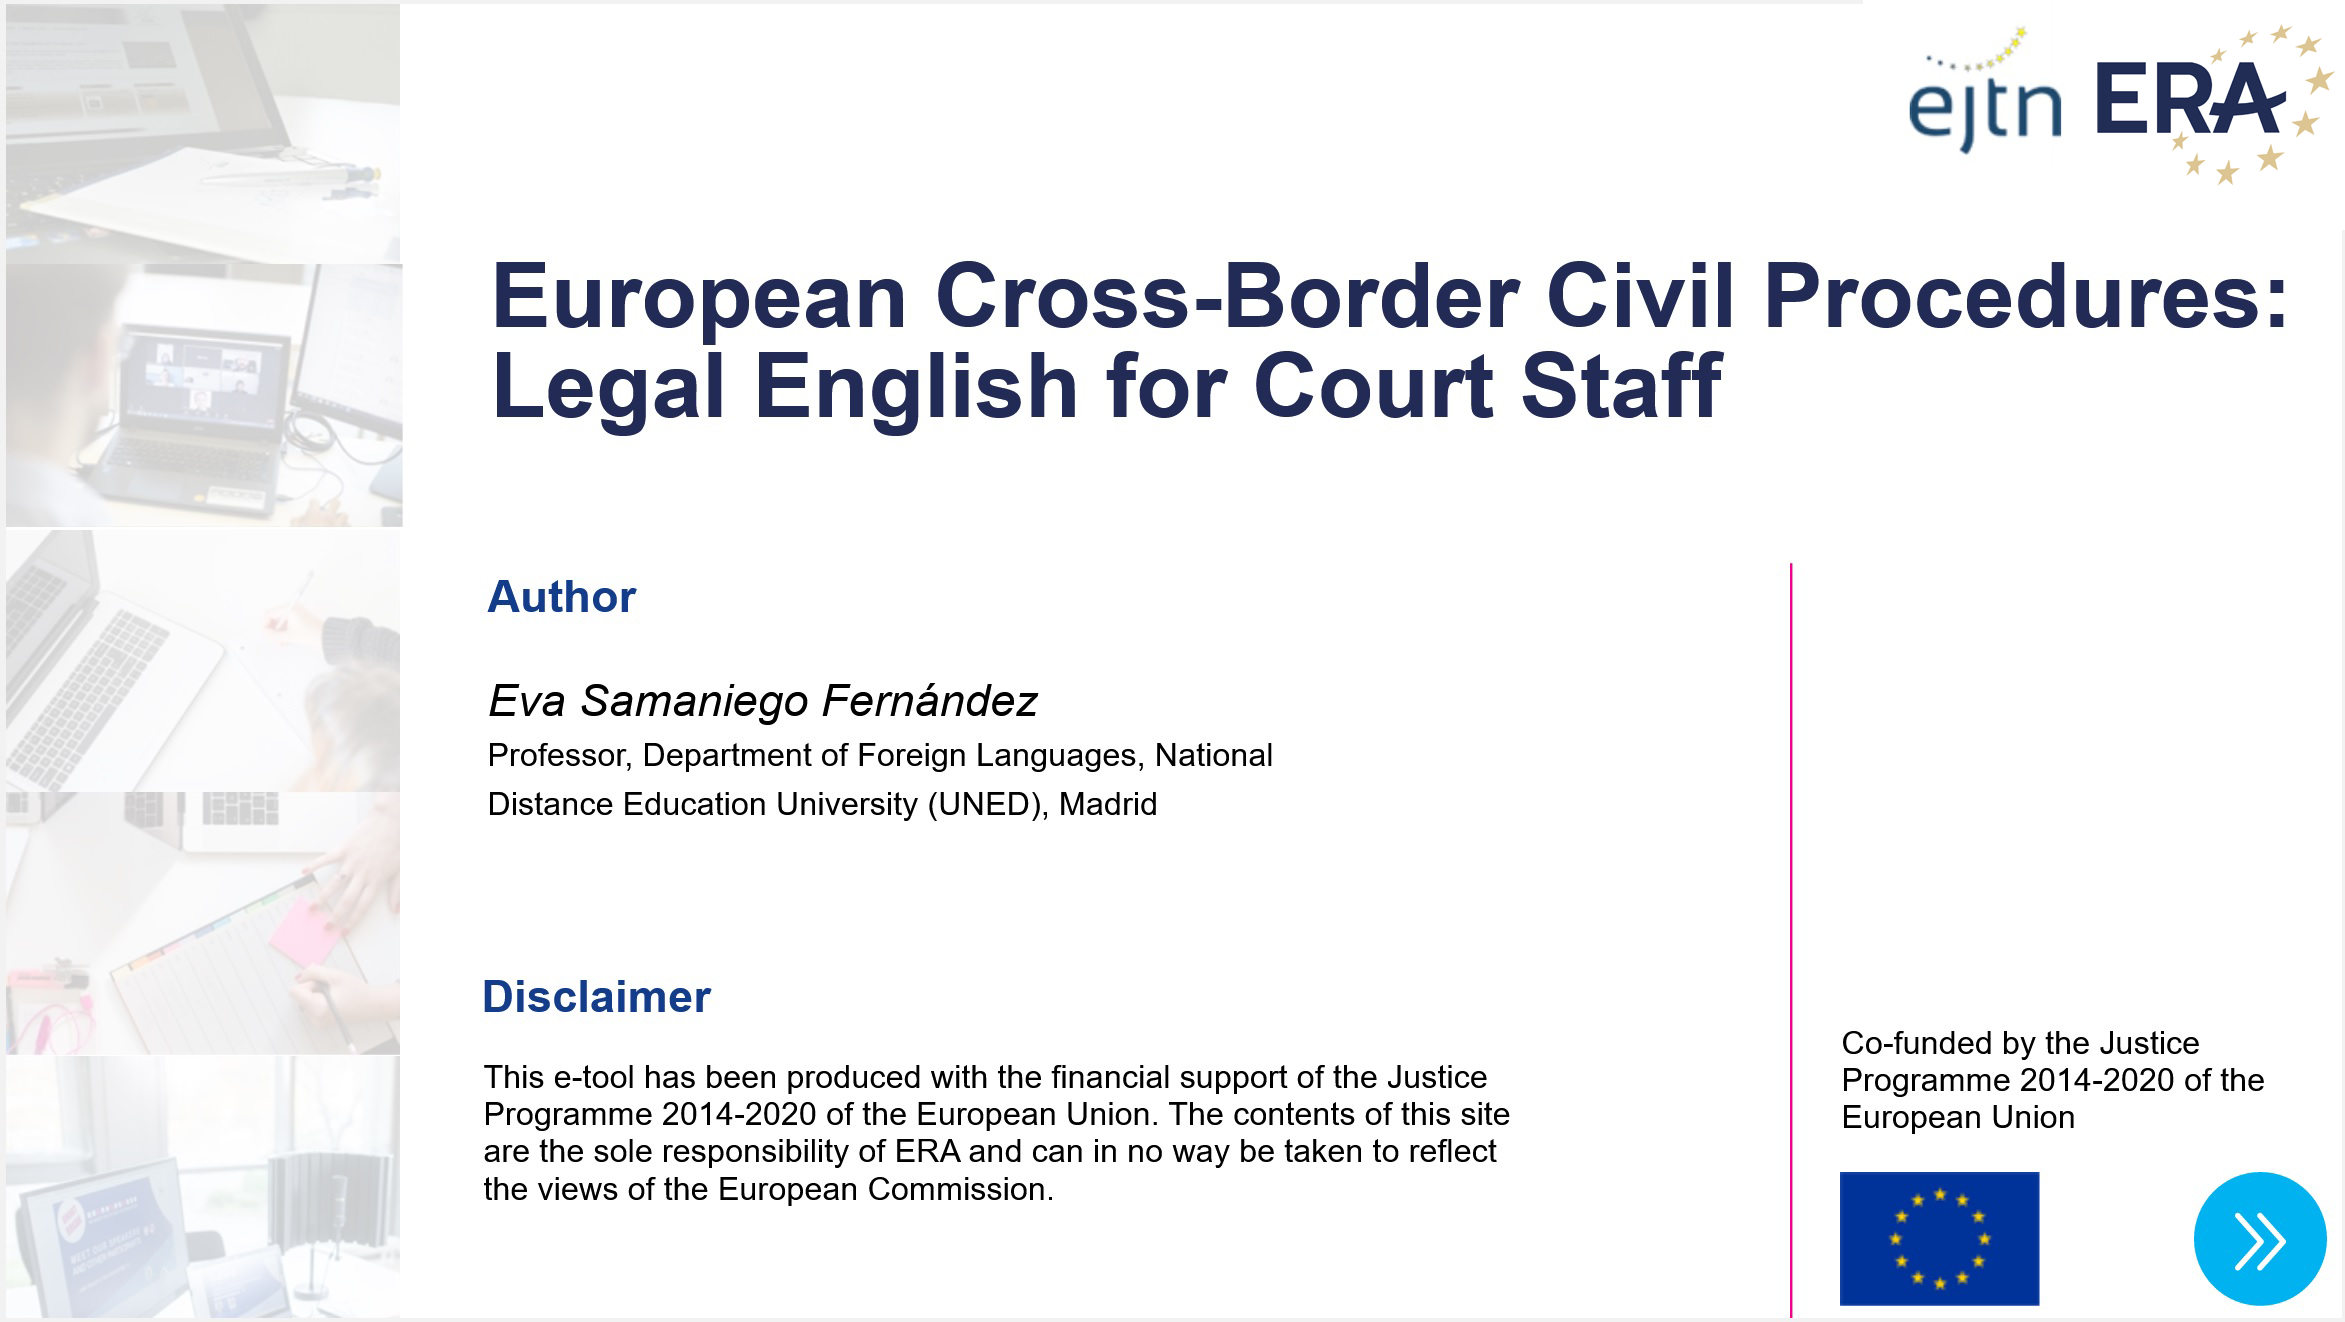 e-Tool on European Cross-border Civil Procedures: Legal English for Court Staff